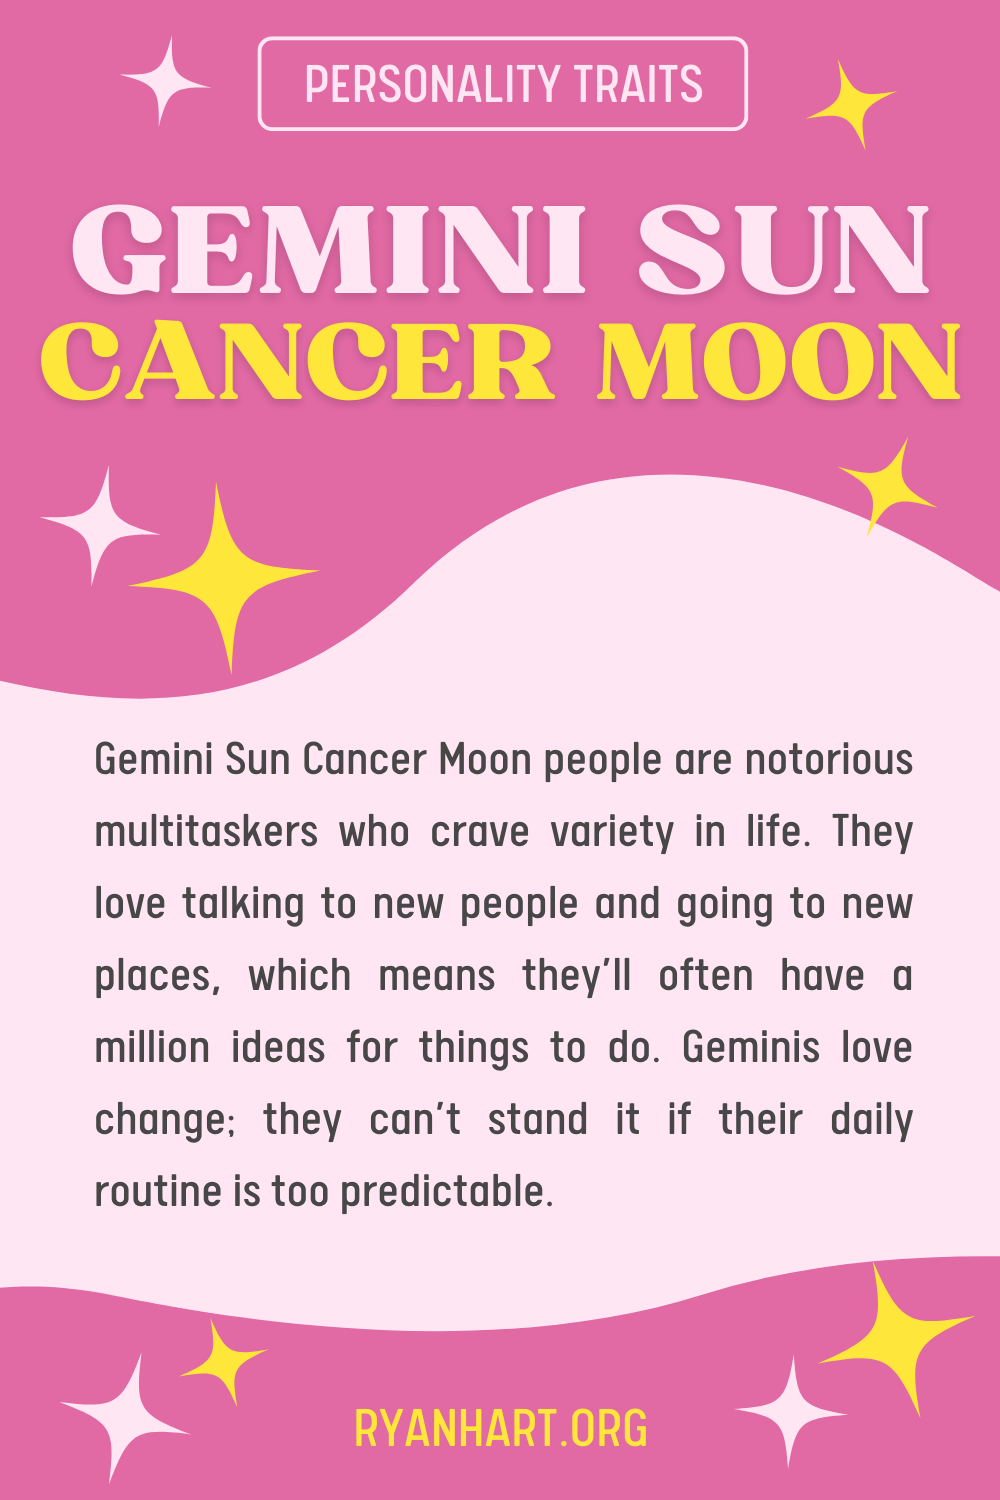  Gemini Sun Cancer Moon លក្ខណៈបុគ្គលិកលក្ខណៈ